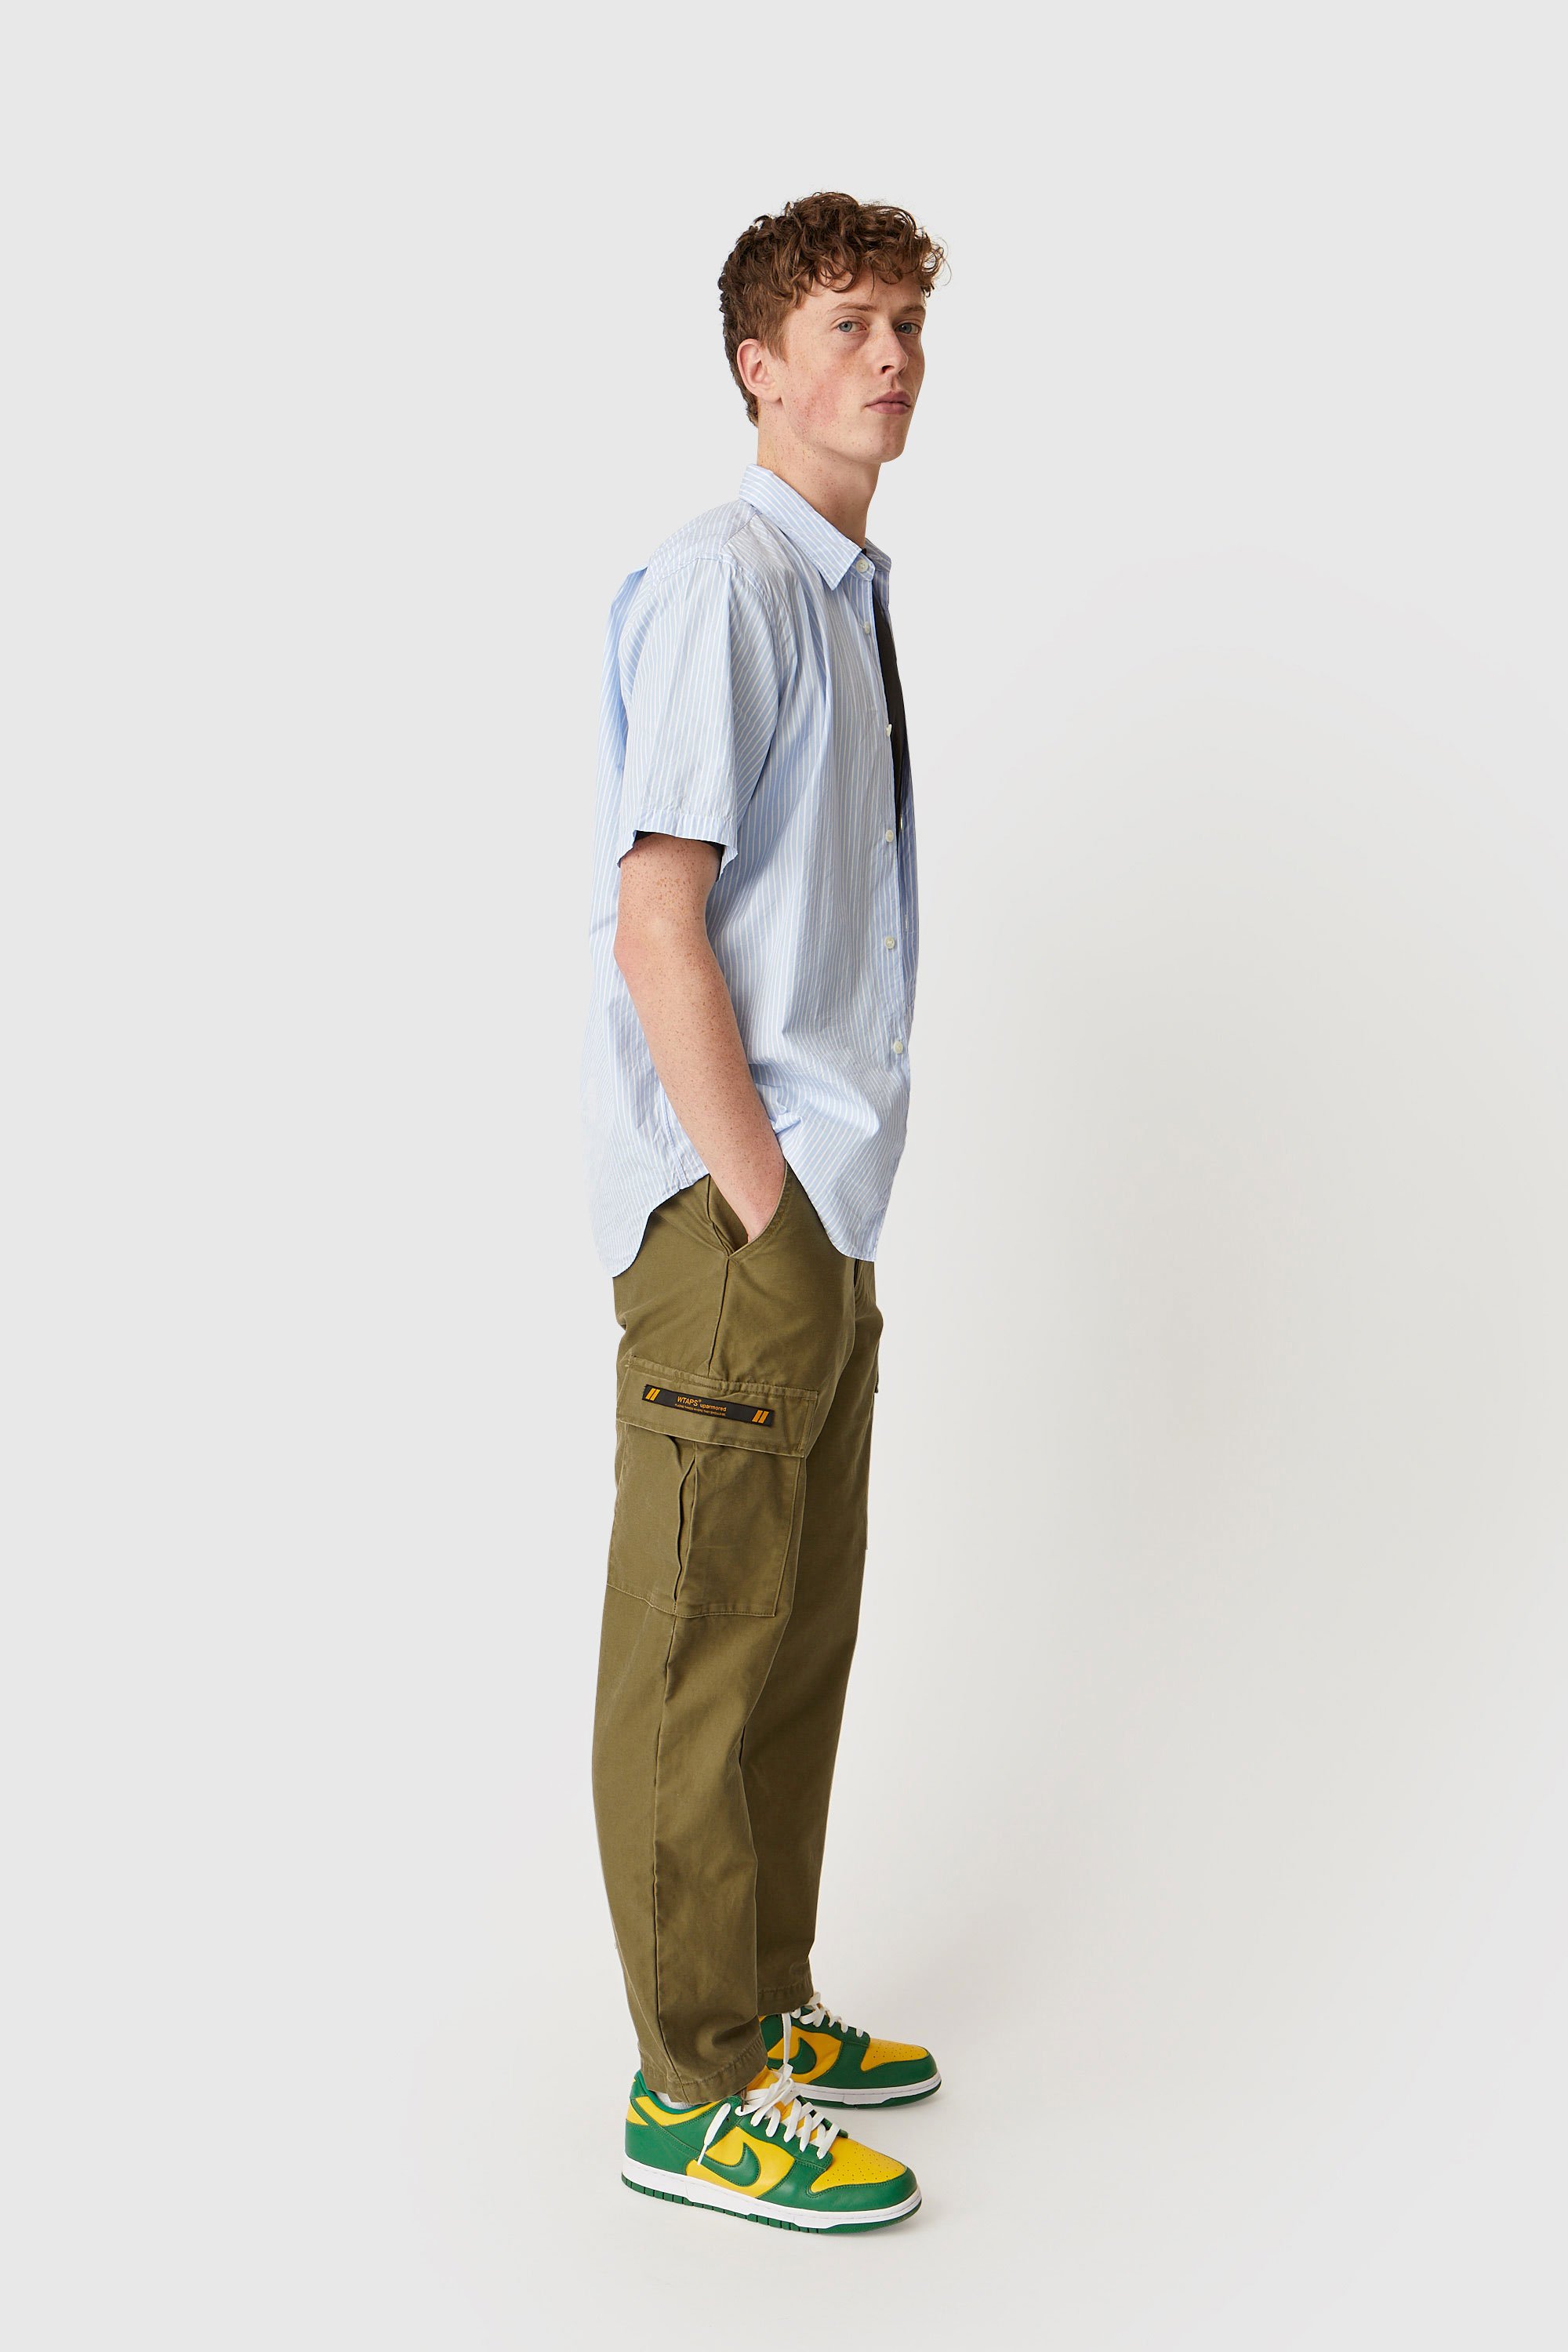 WTAPS Jungle Stock 01 / Trousers Olive drab | WoodWood.com